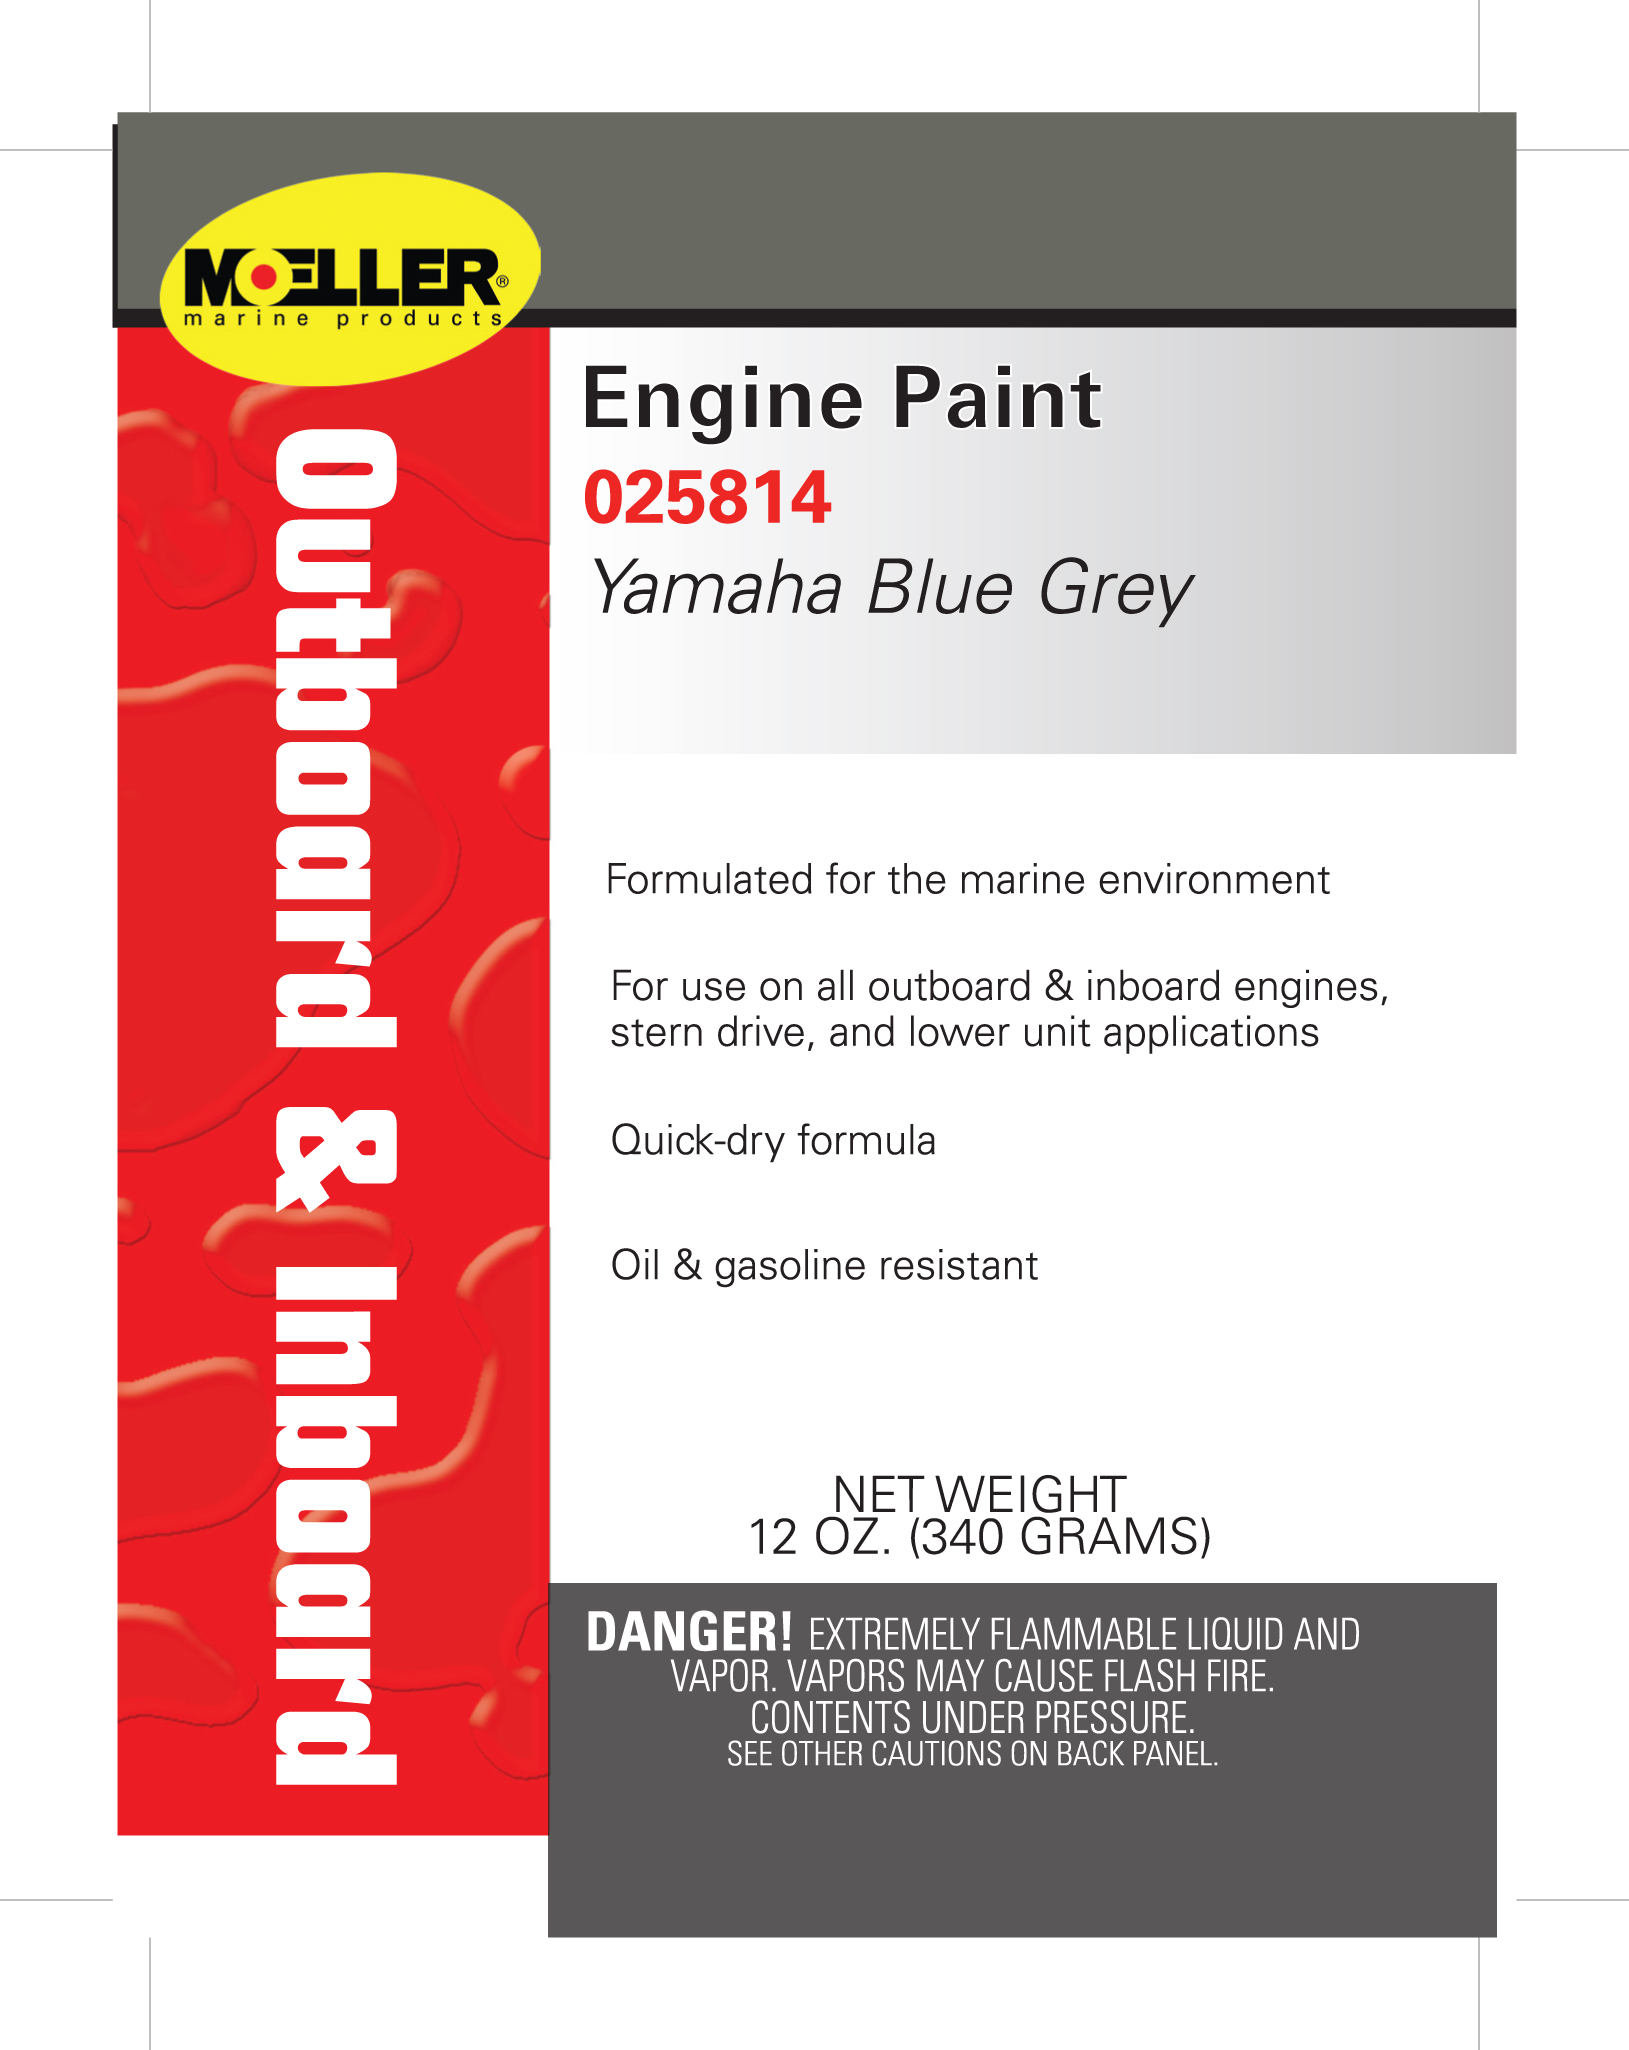 Yamaha Blue Grey Engine Paint #025814 Moeller Marine 